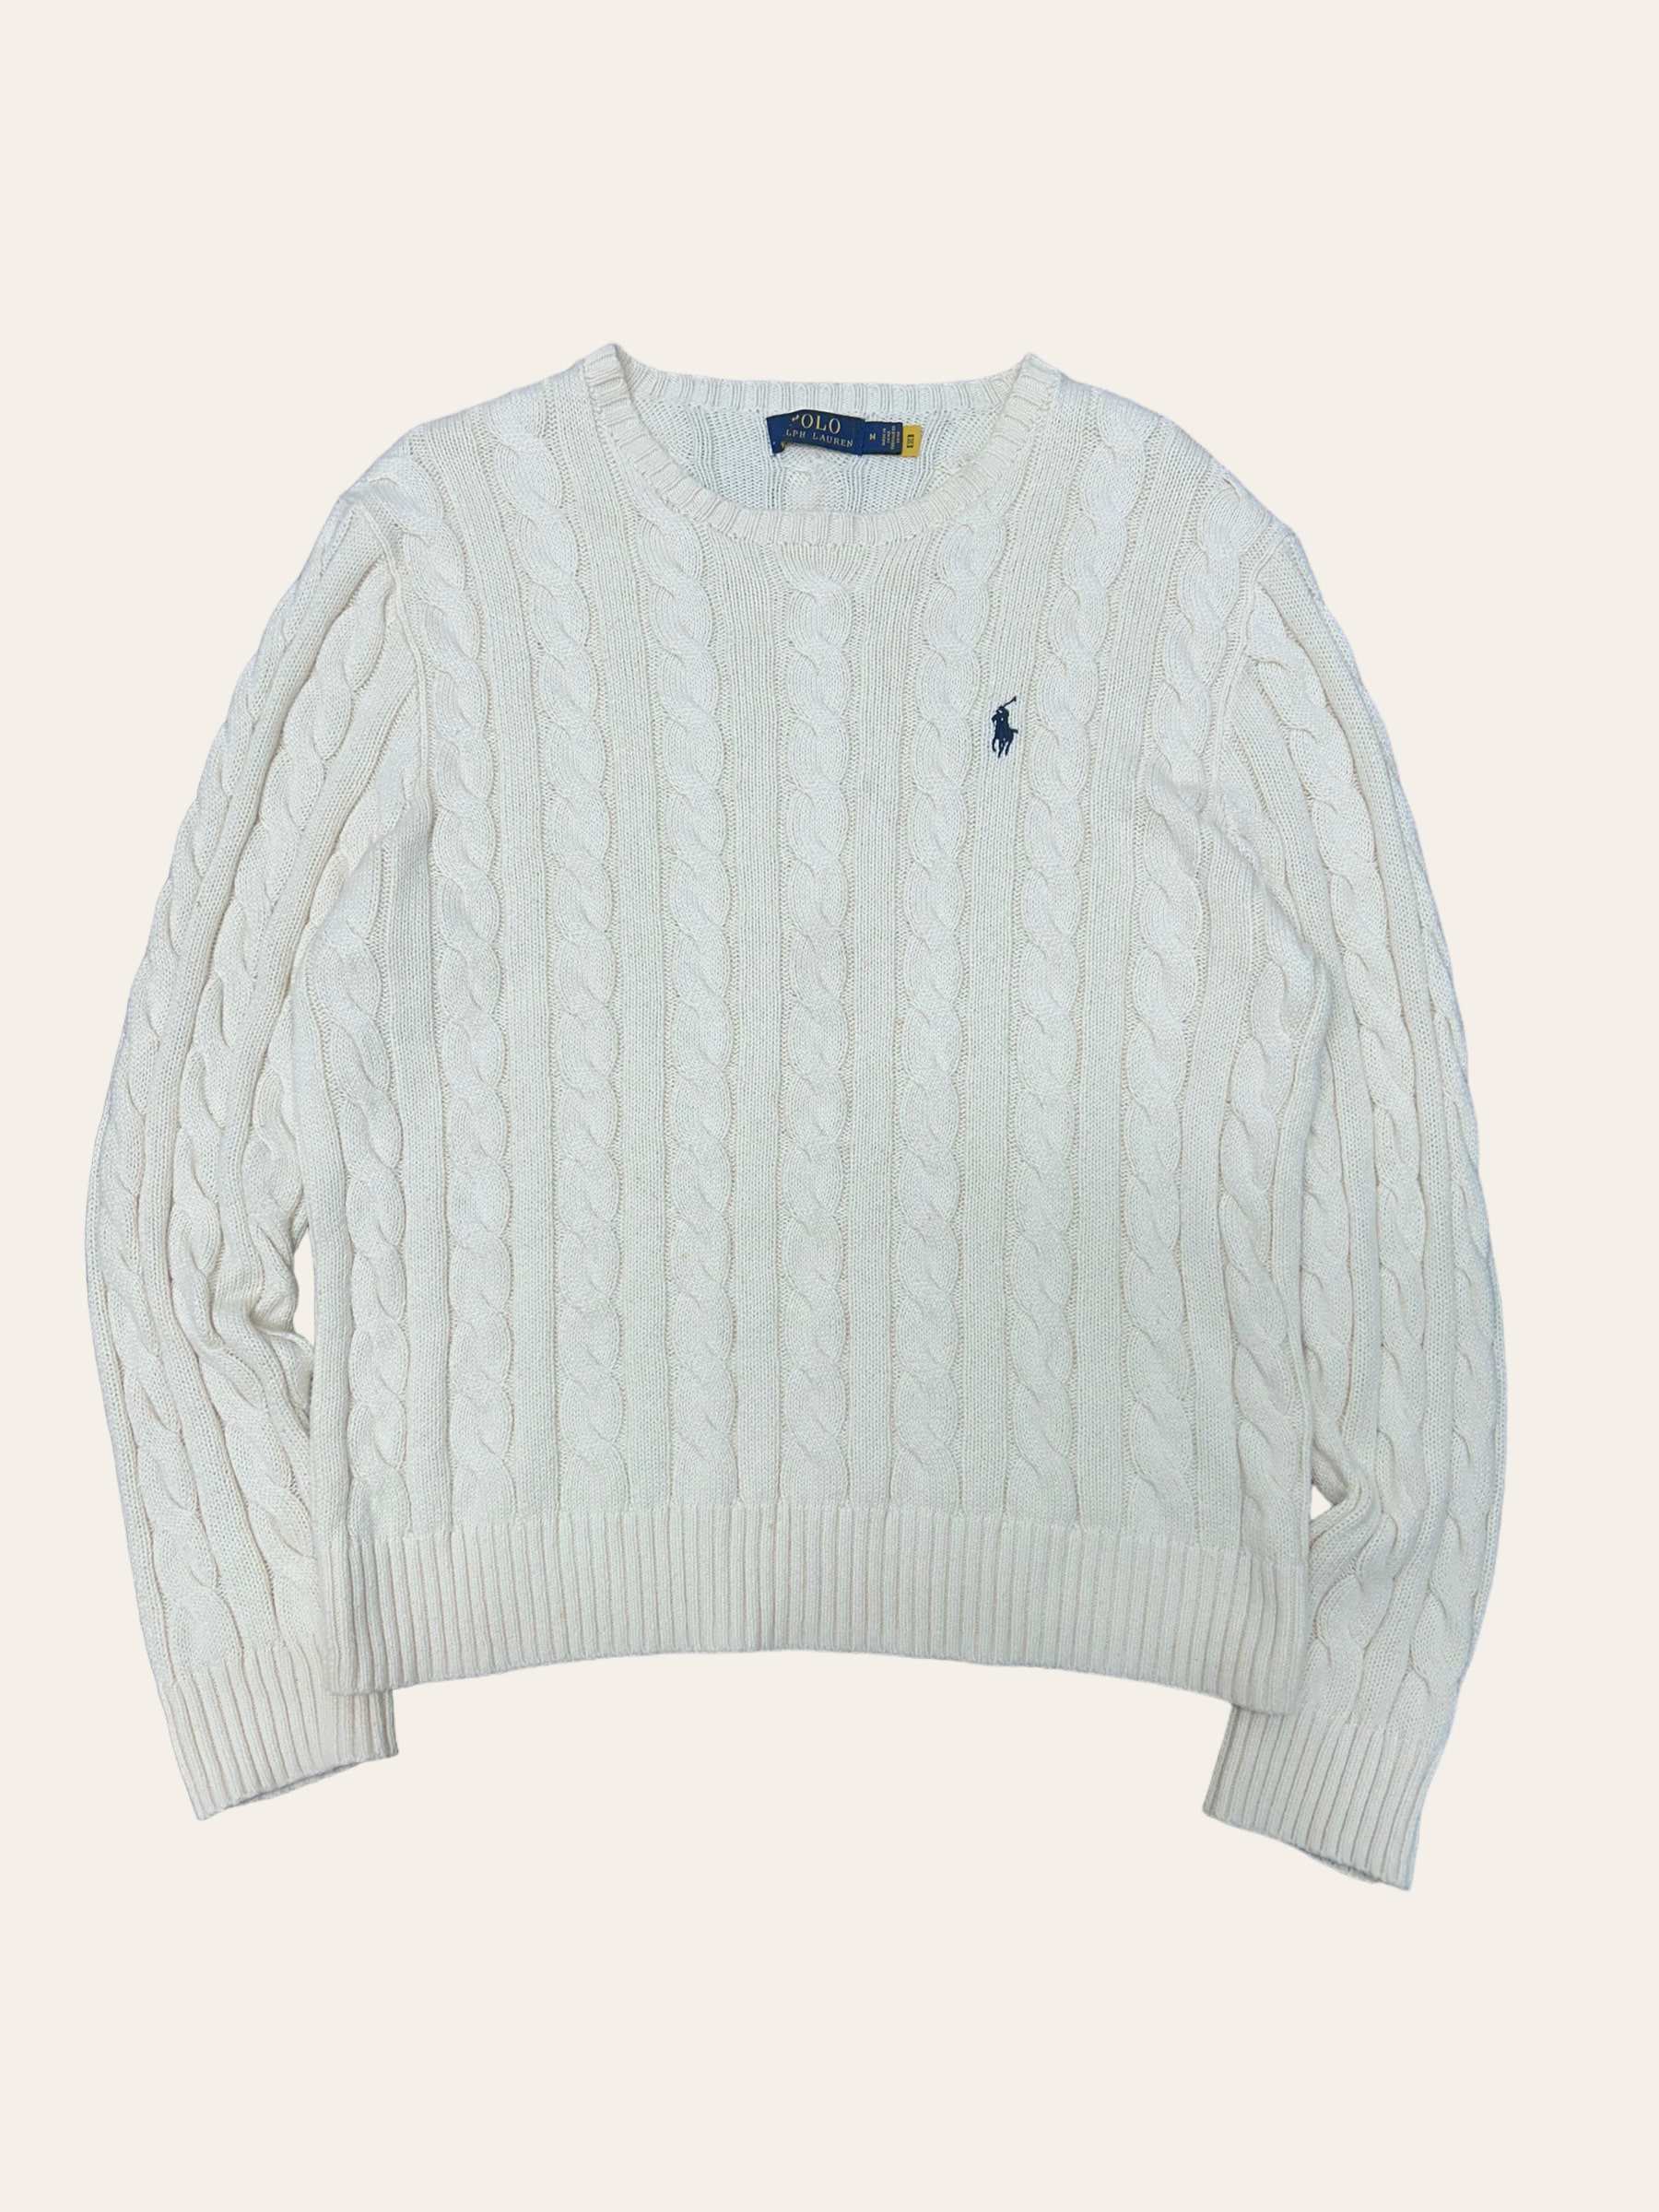 Polo ralph lauren ivory color cotton cable sweater M